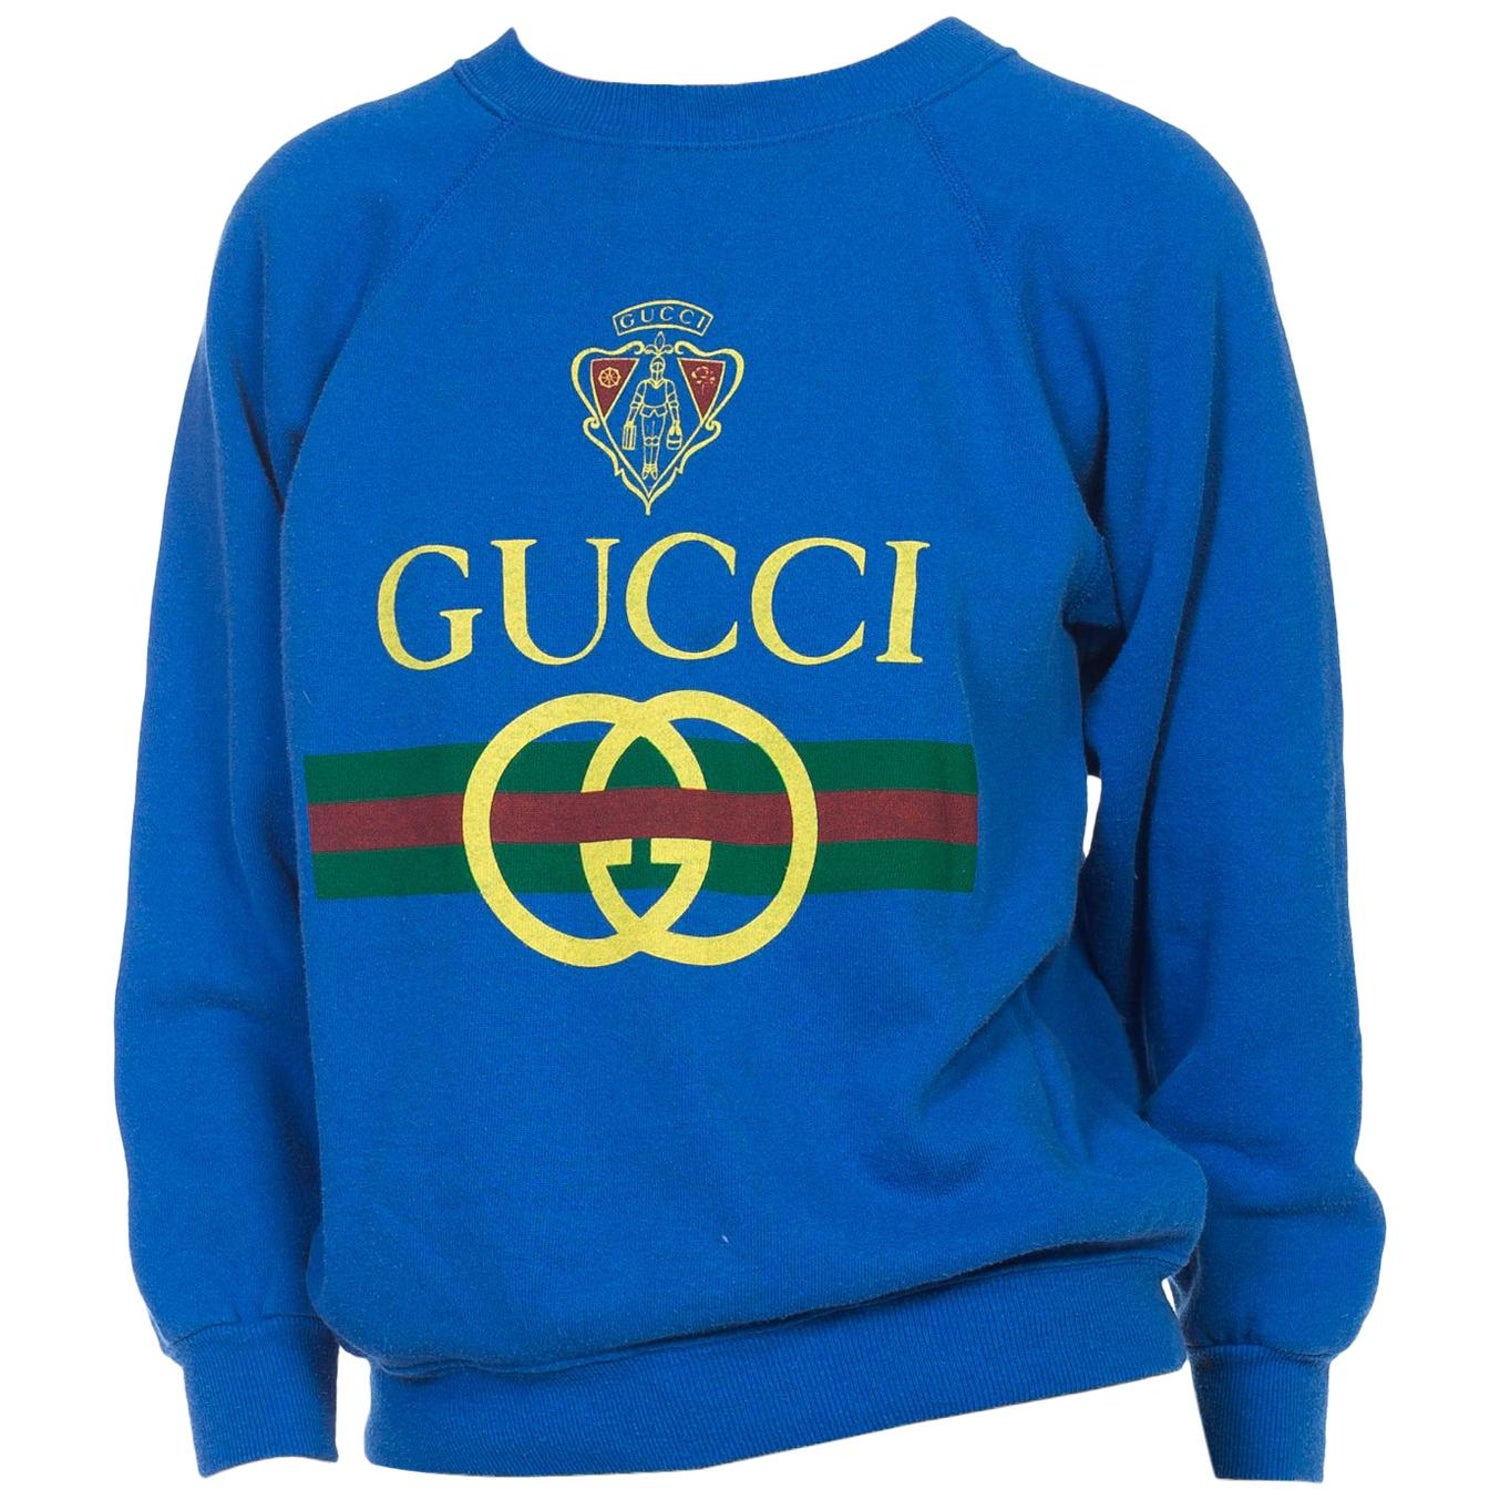 Bootleg Gucci - 5 For Sale on 1stDibs